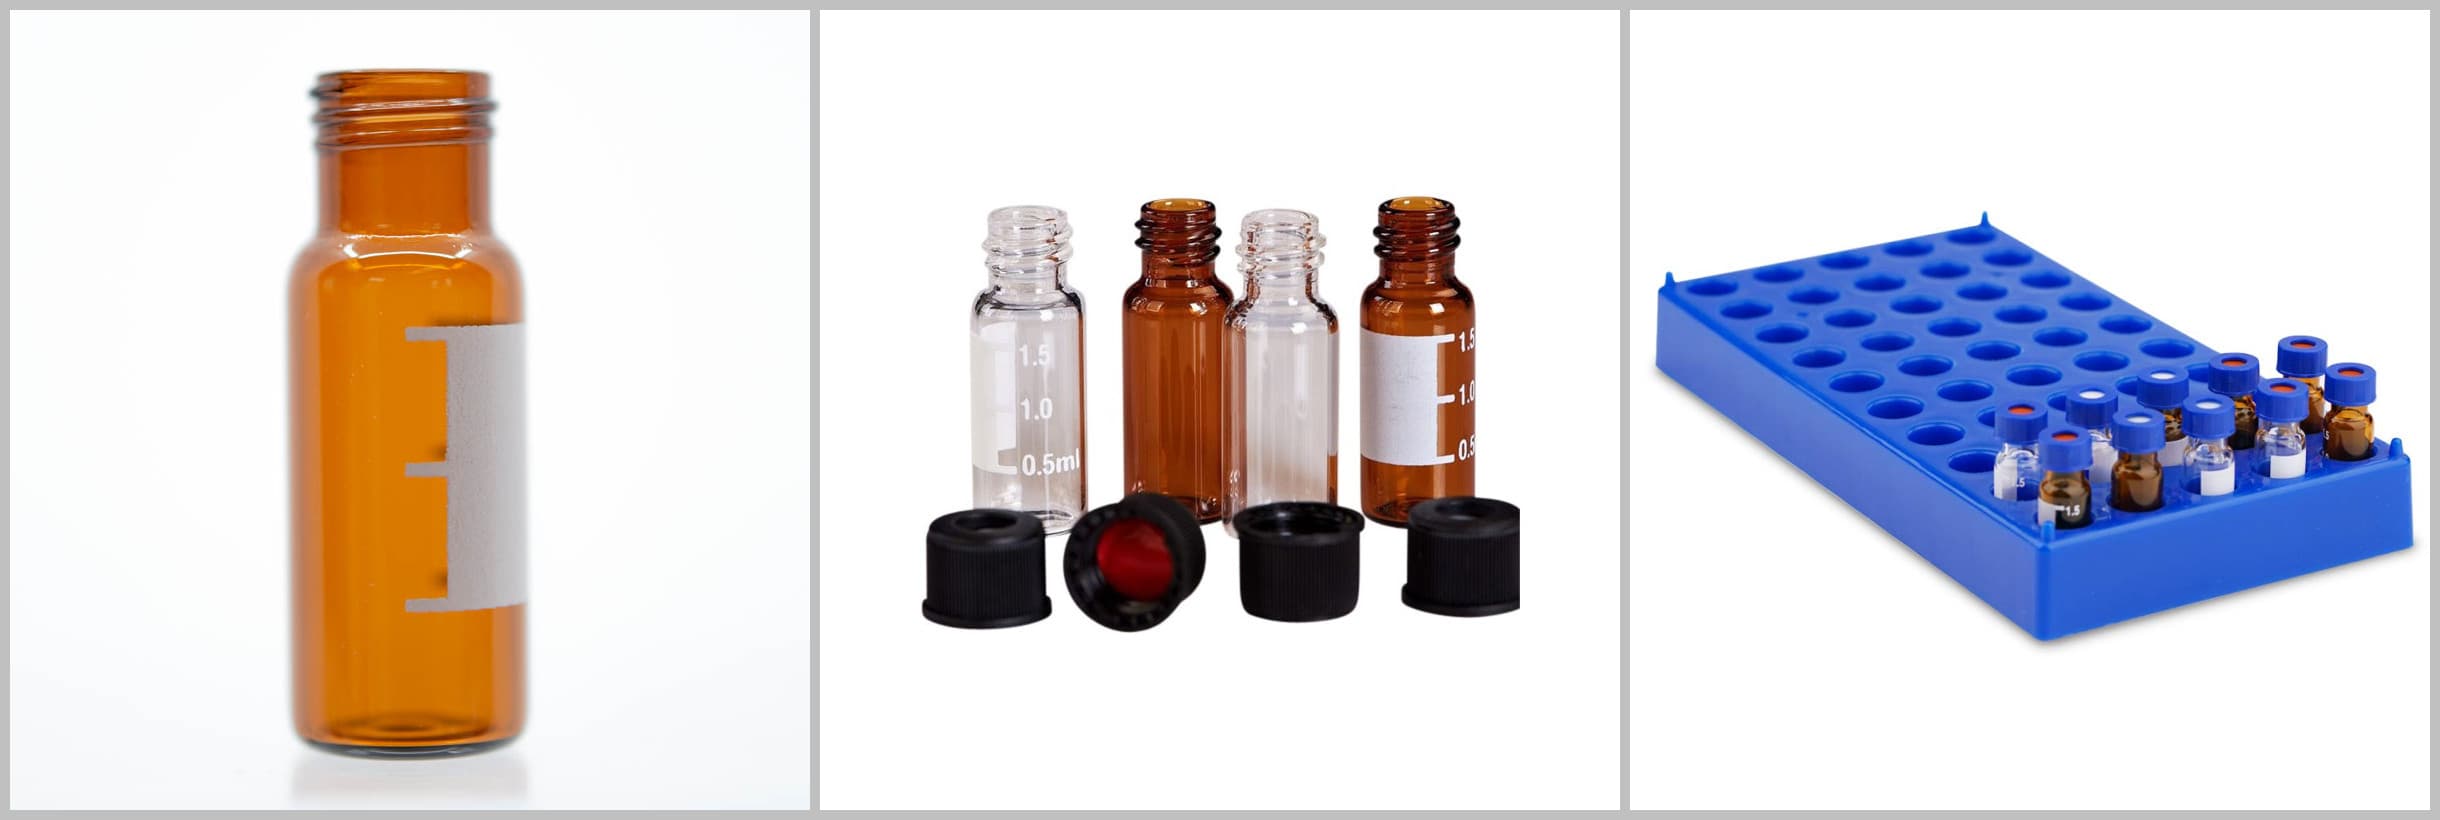 2ml autosampler vialChina 2ml 12x32mm borosilicate glass hplc vial